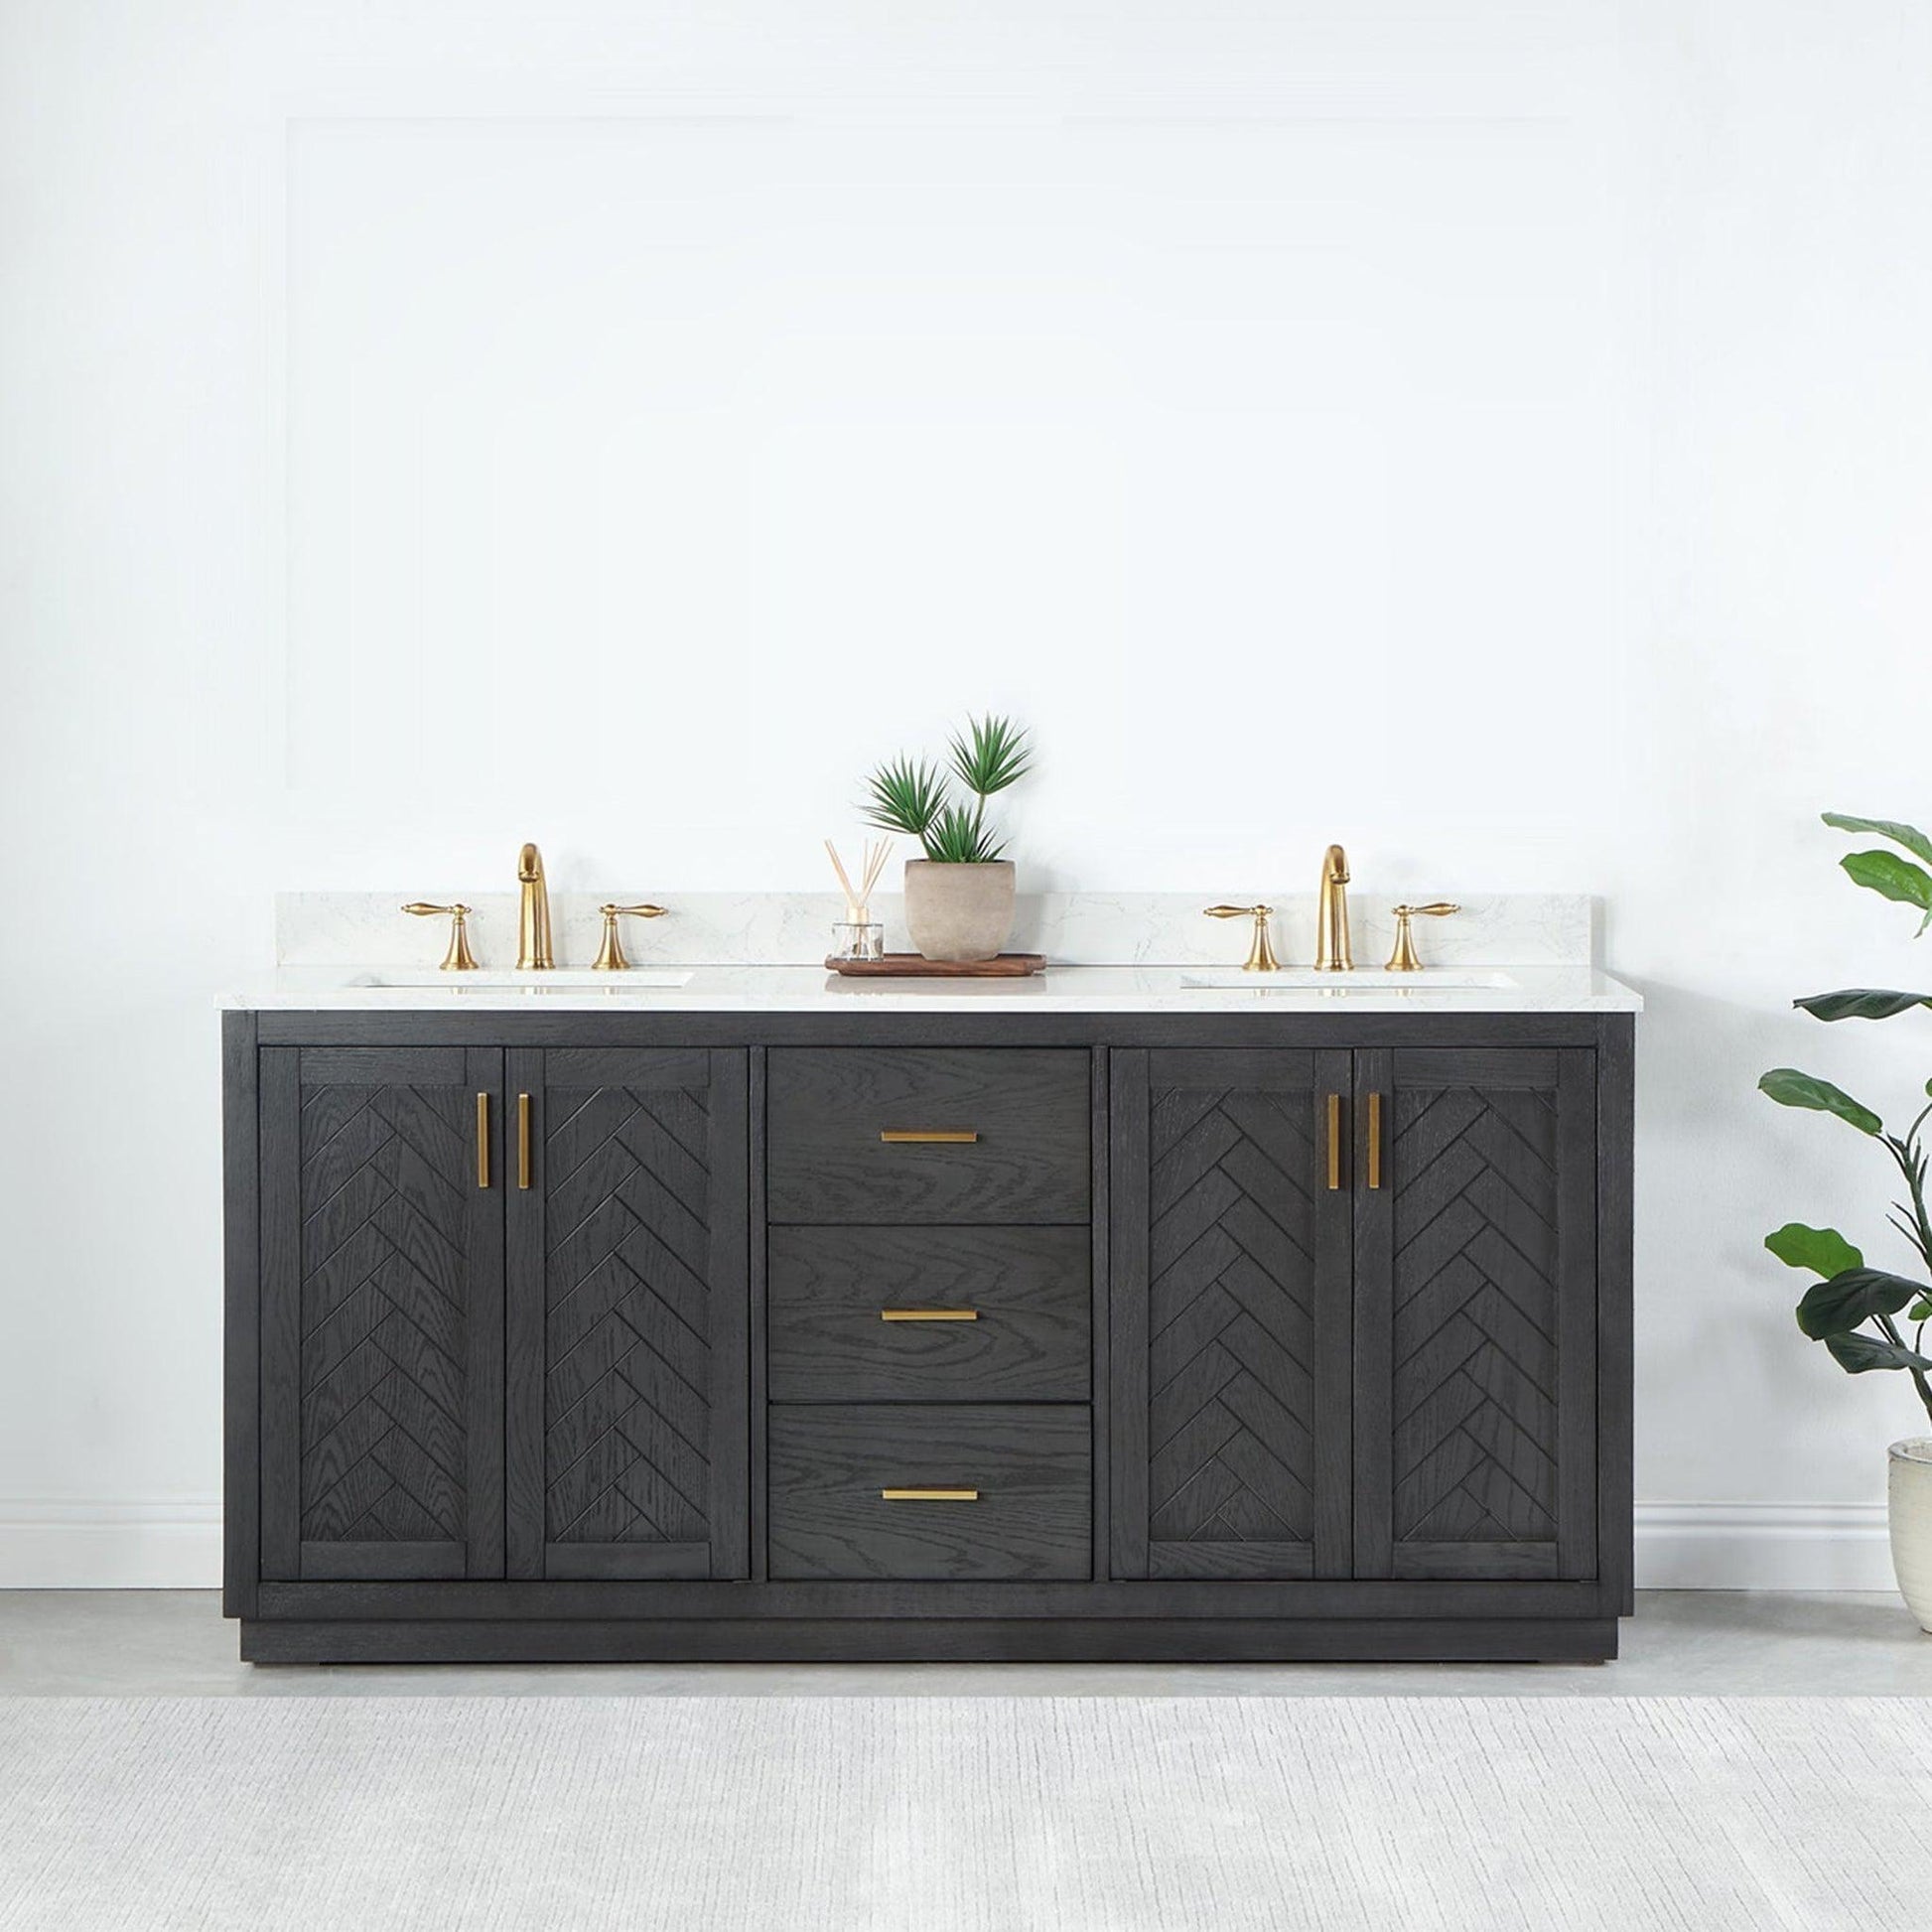 Altair Gazsi 72" Brown Oak Freestanding Double Bathroom Vanity Set With Elegant Composite Grain White Stone Top, Two Rectangular Undermount Ceramic Sinks, Overflow, and Backsplash